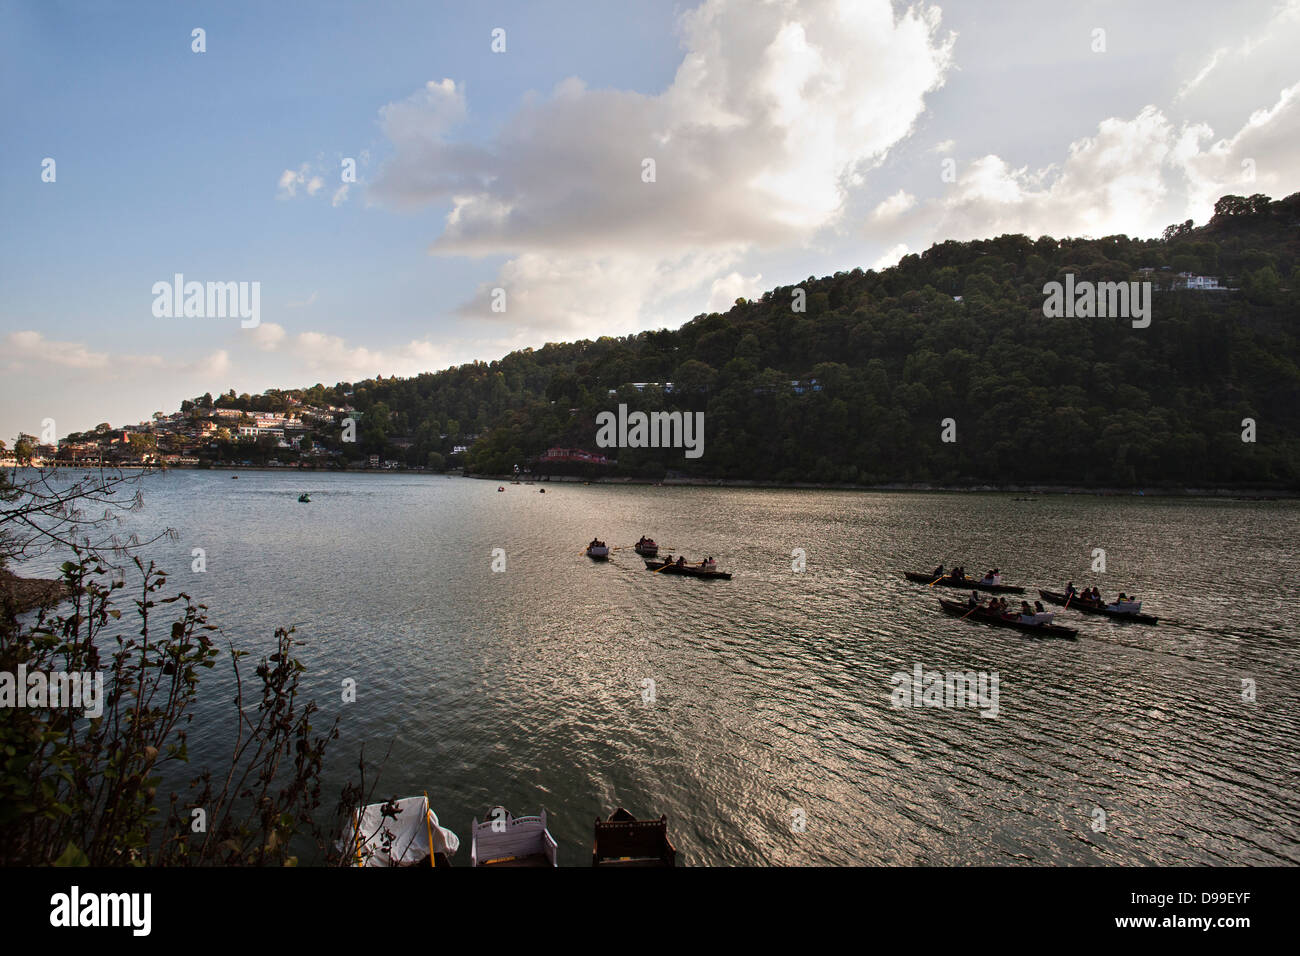 La gente de botes a remo en un lago, Nainital, Uttarakhand, India, Asia Foto de stock